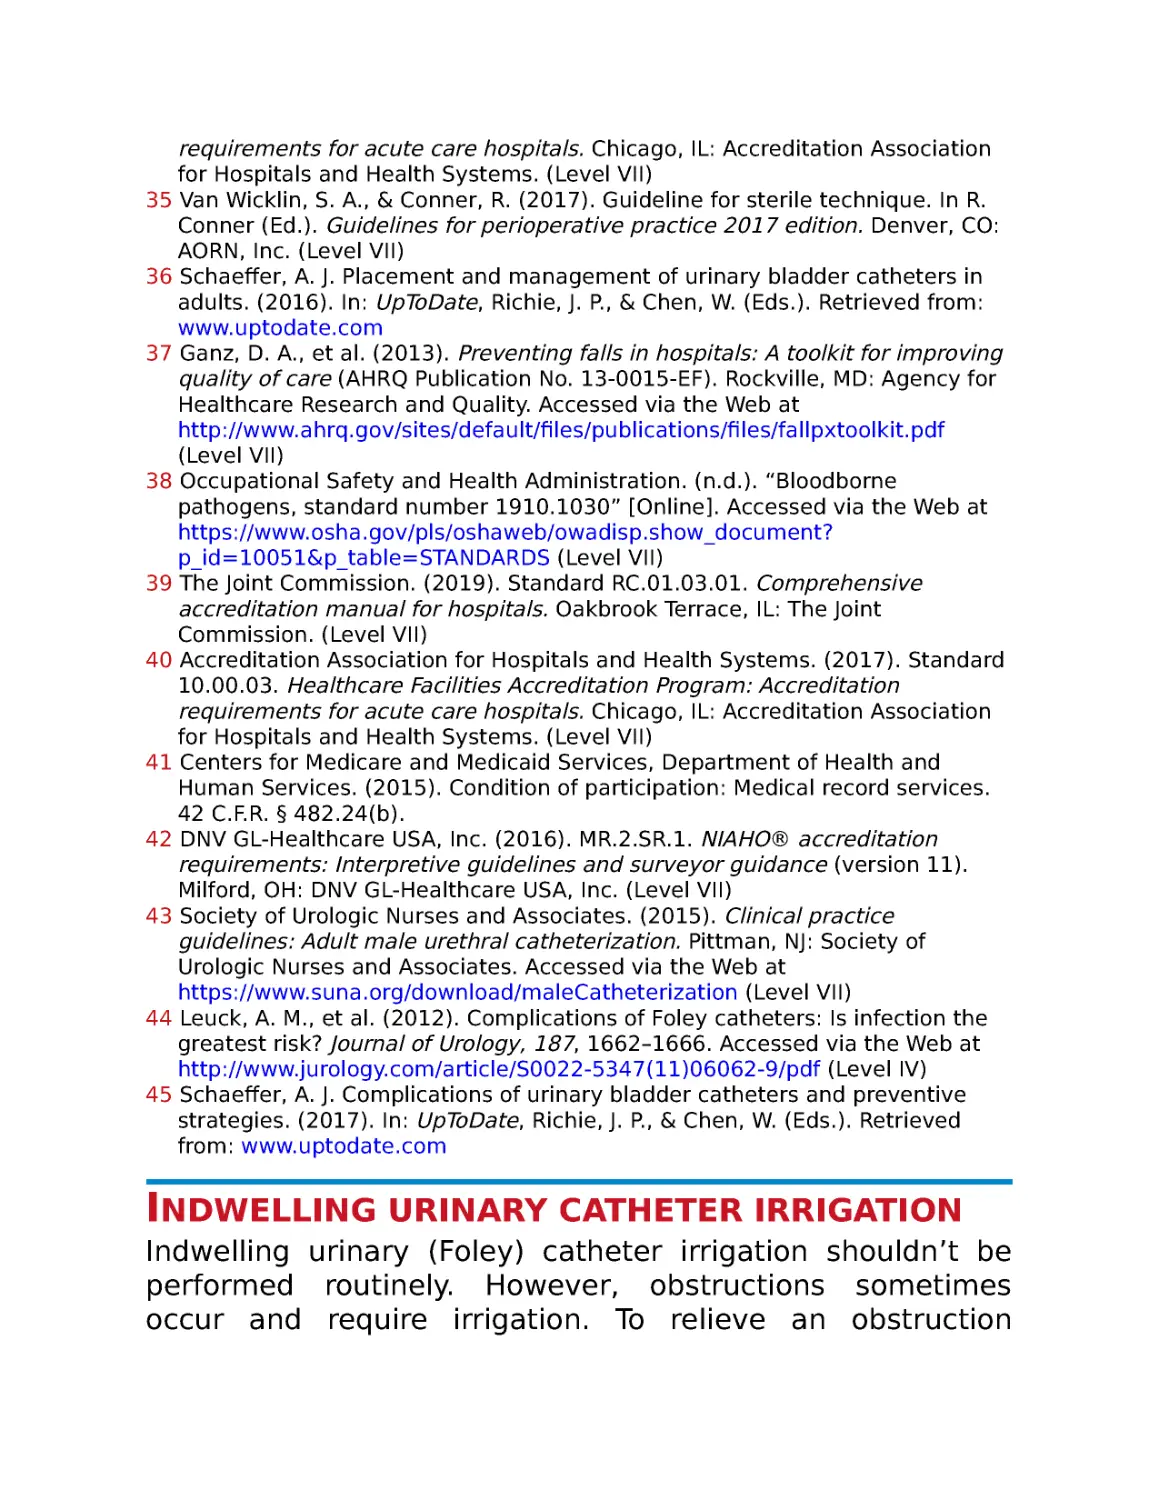 Indwelling urinary catheter irrigation